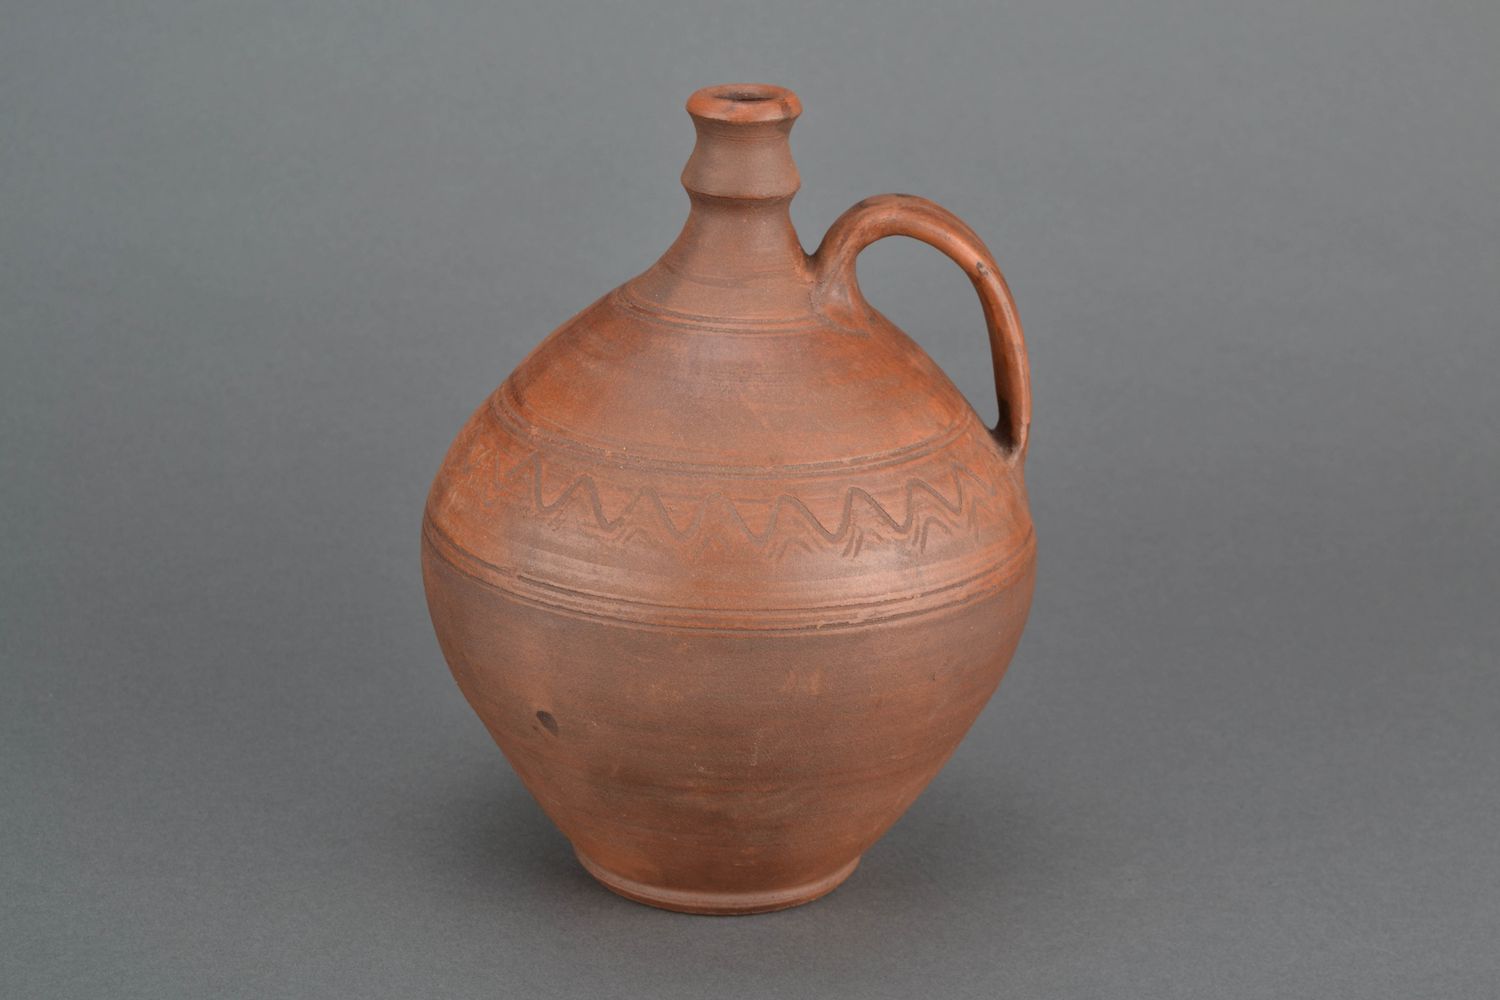 100 oz ceramic wine amphora carafe with handle in terracotta file 2,7 lb photo 1